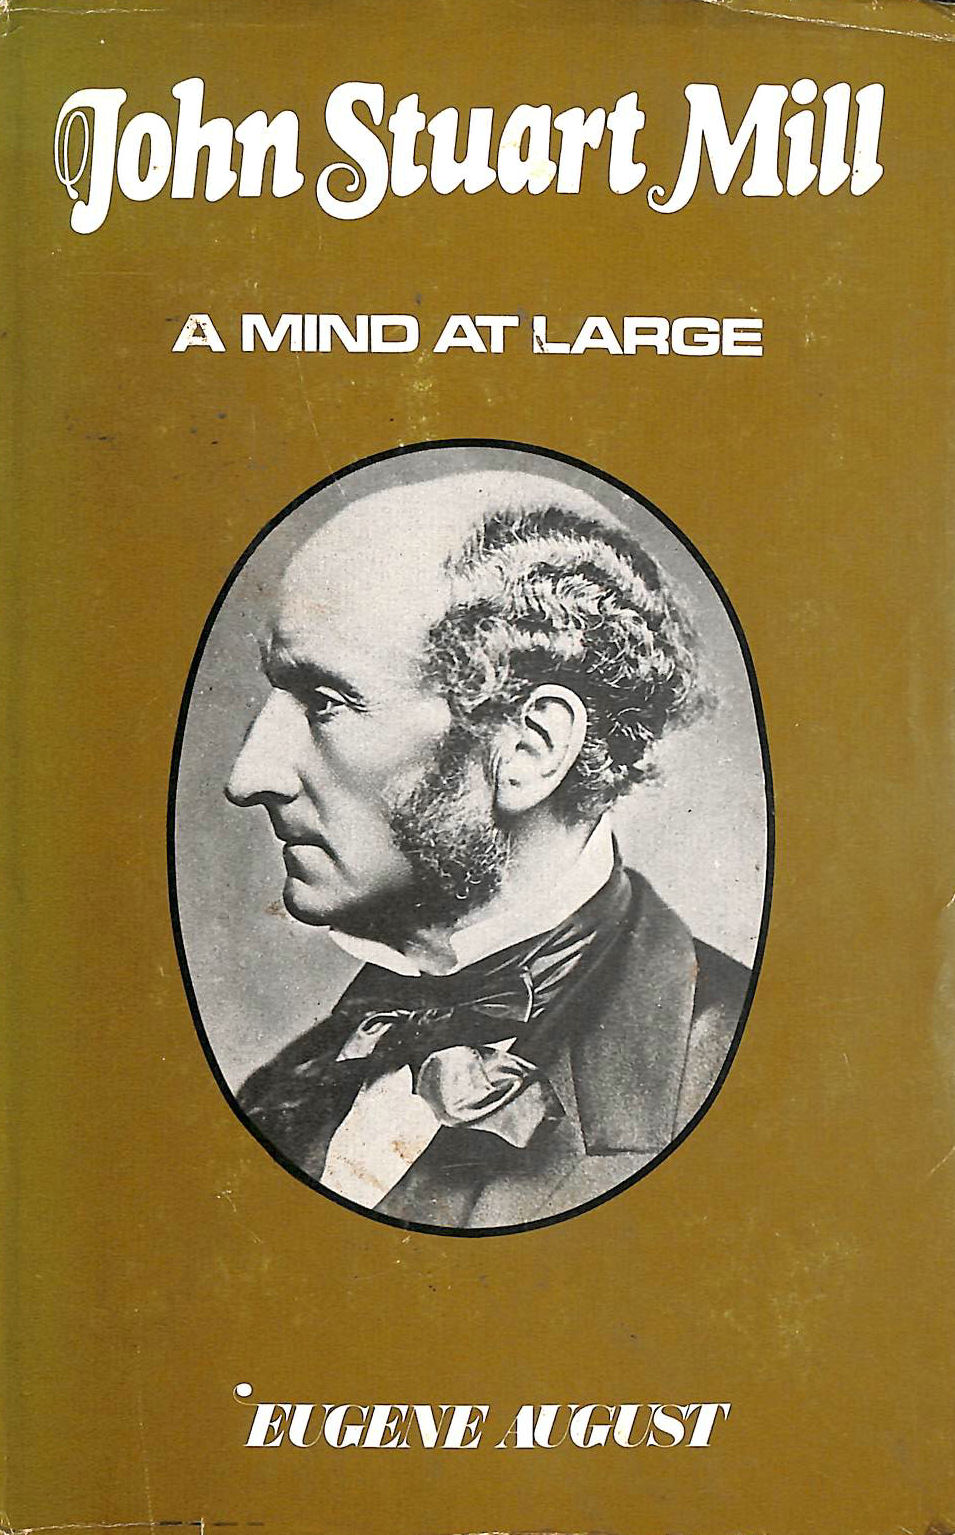 EUGENE AUGUST - John Stuart Mill: A Mind at Large